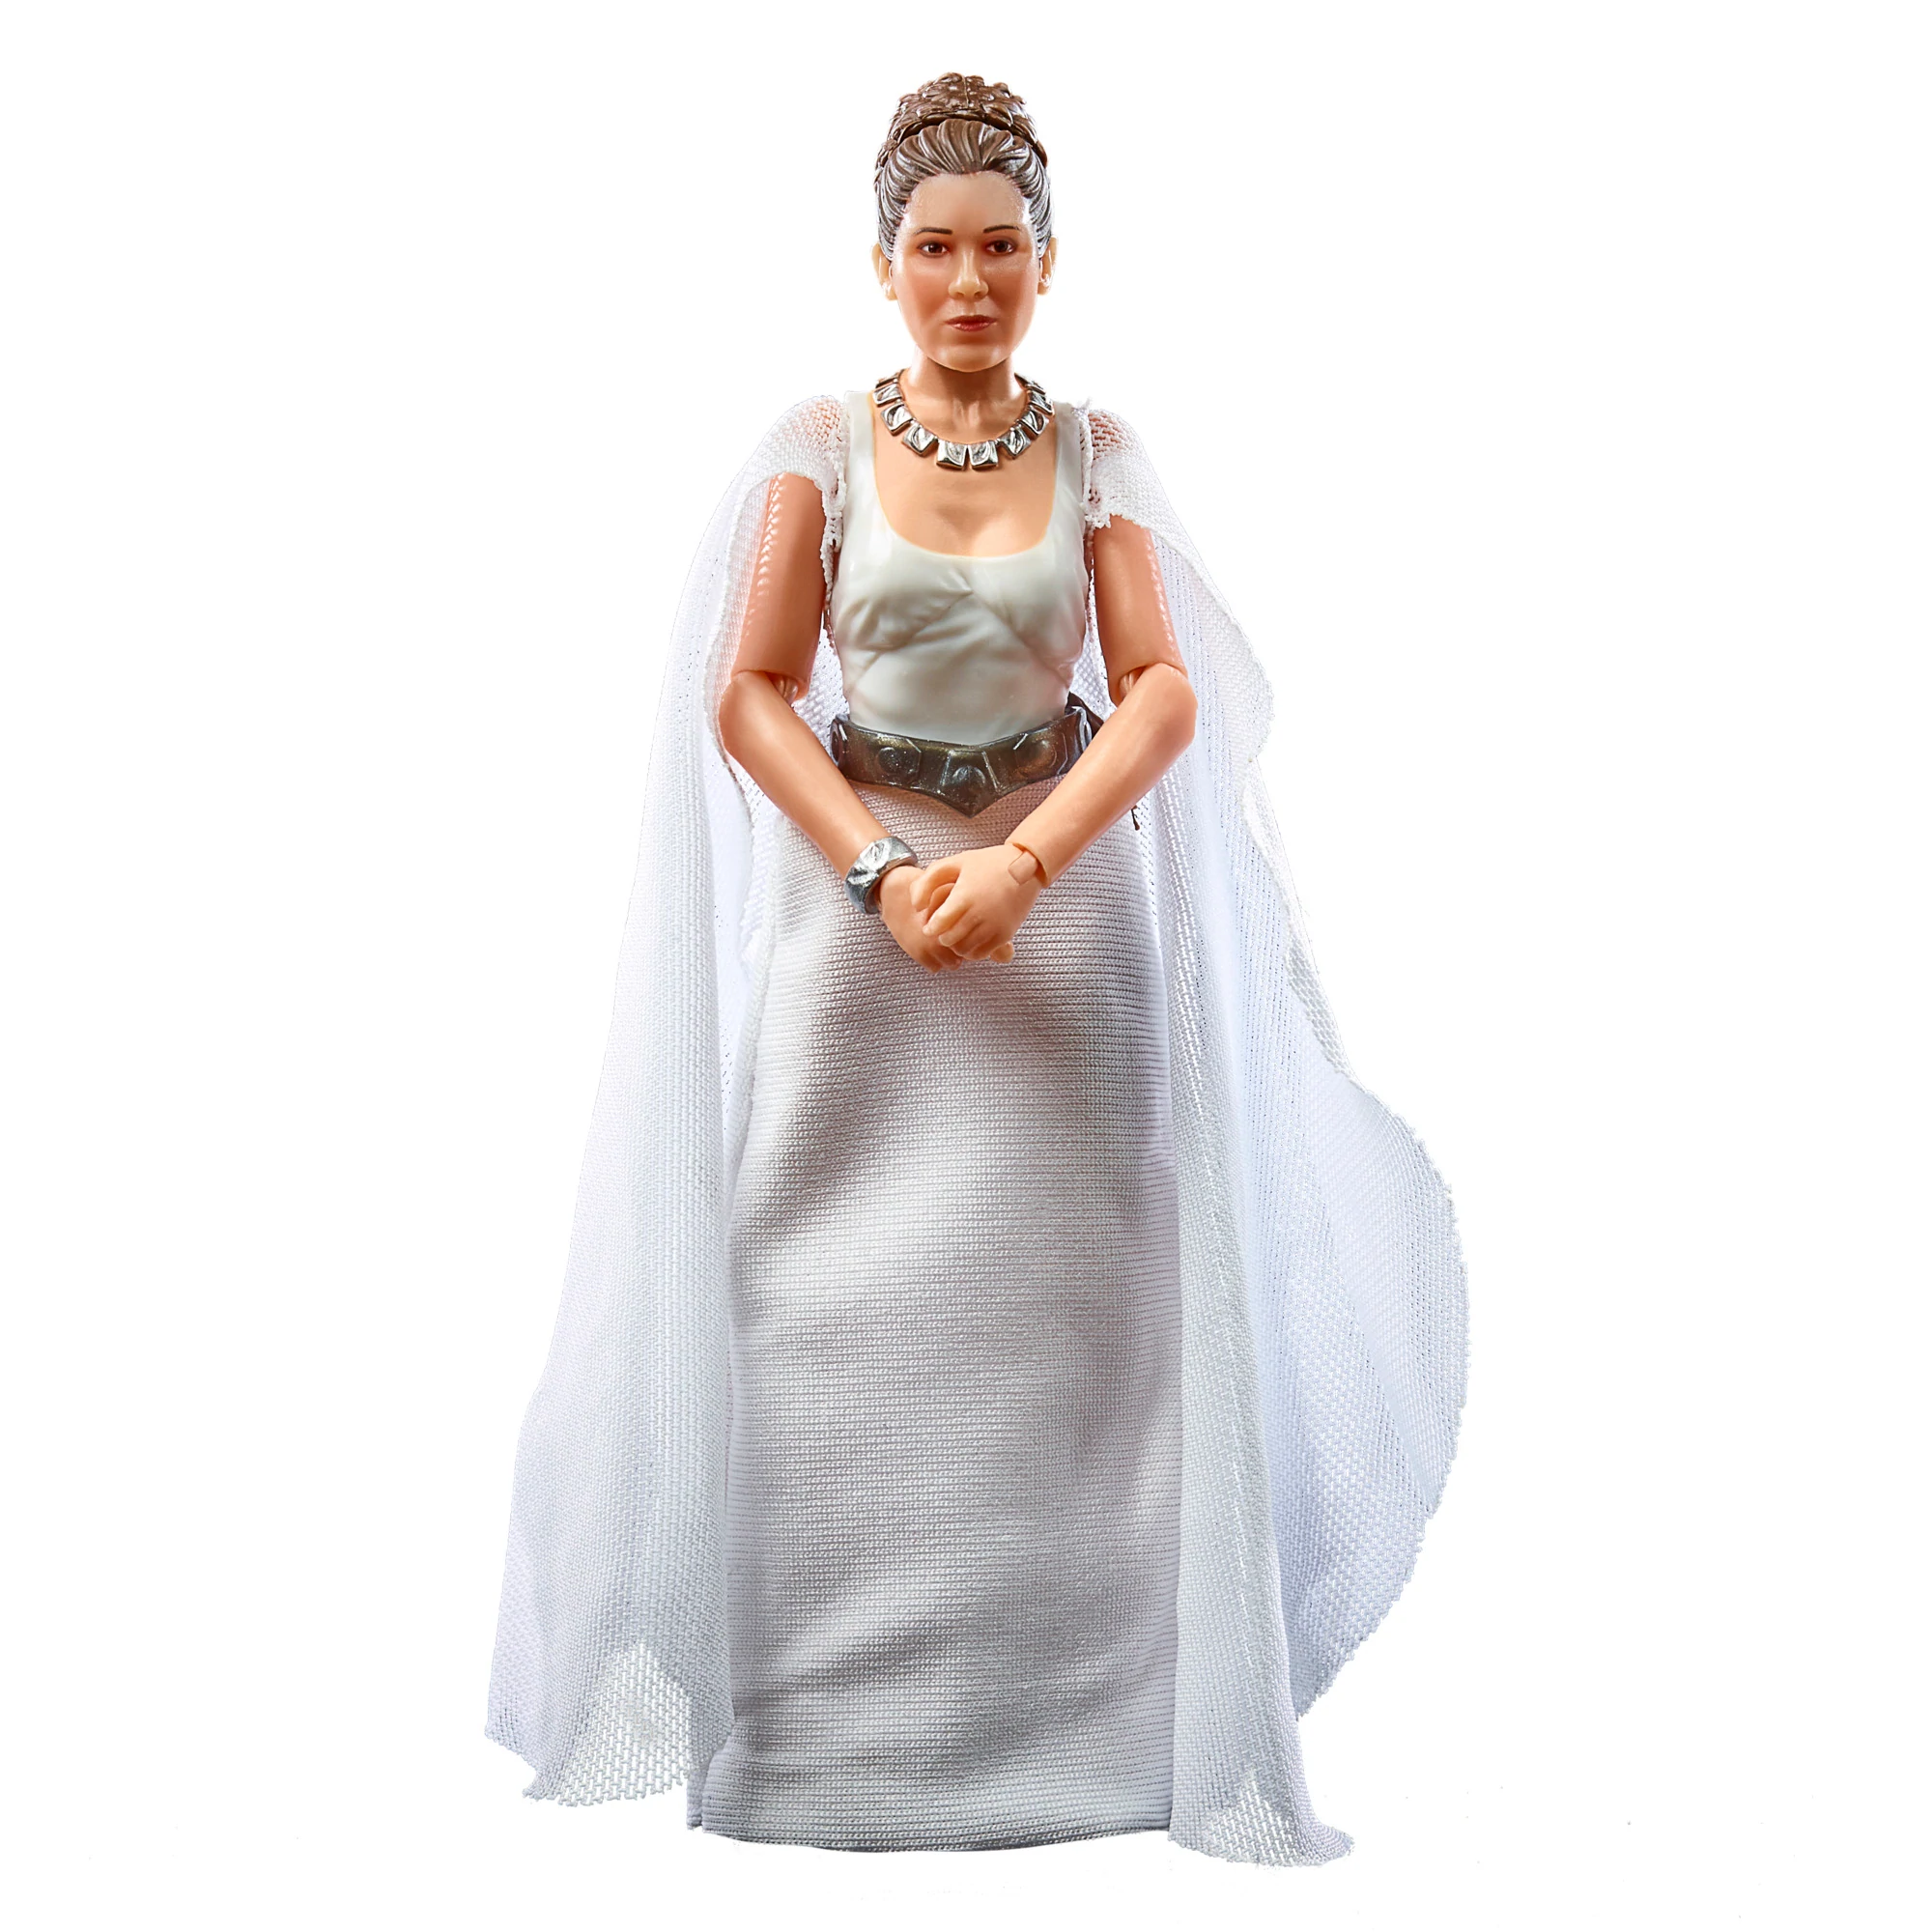 Star Wars - The Black Series - A New Hope - Yavin-4 Princess Leia Organa Action Figure